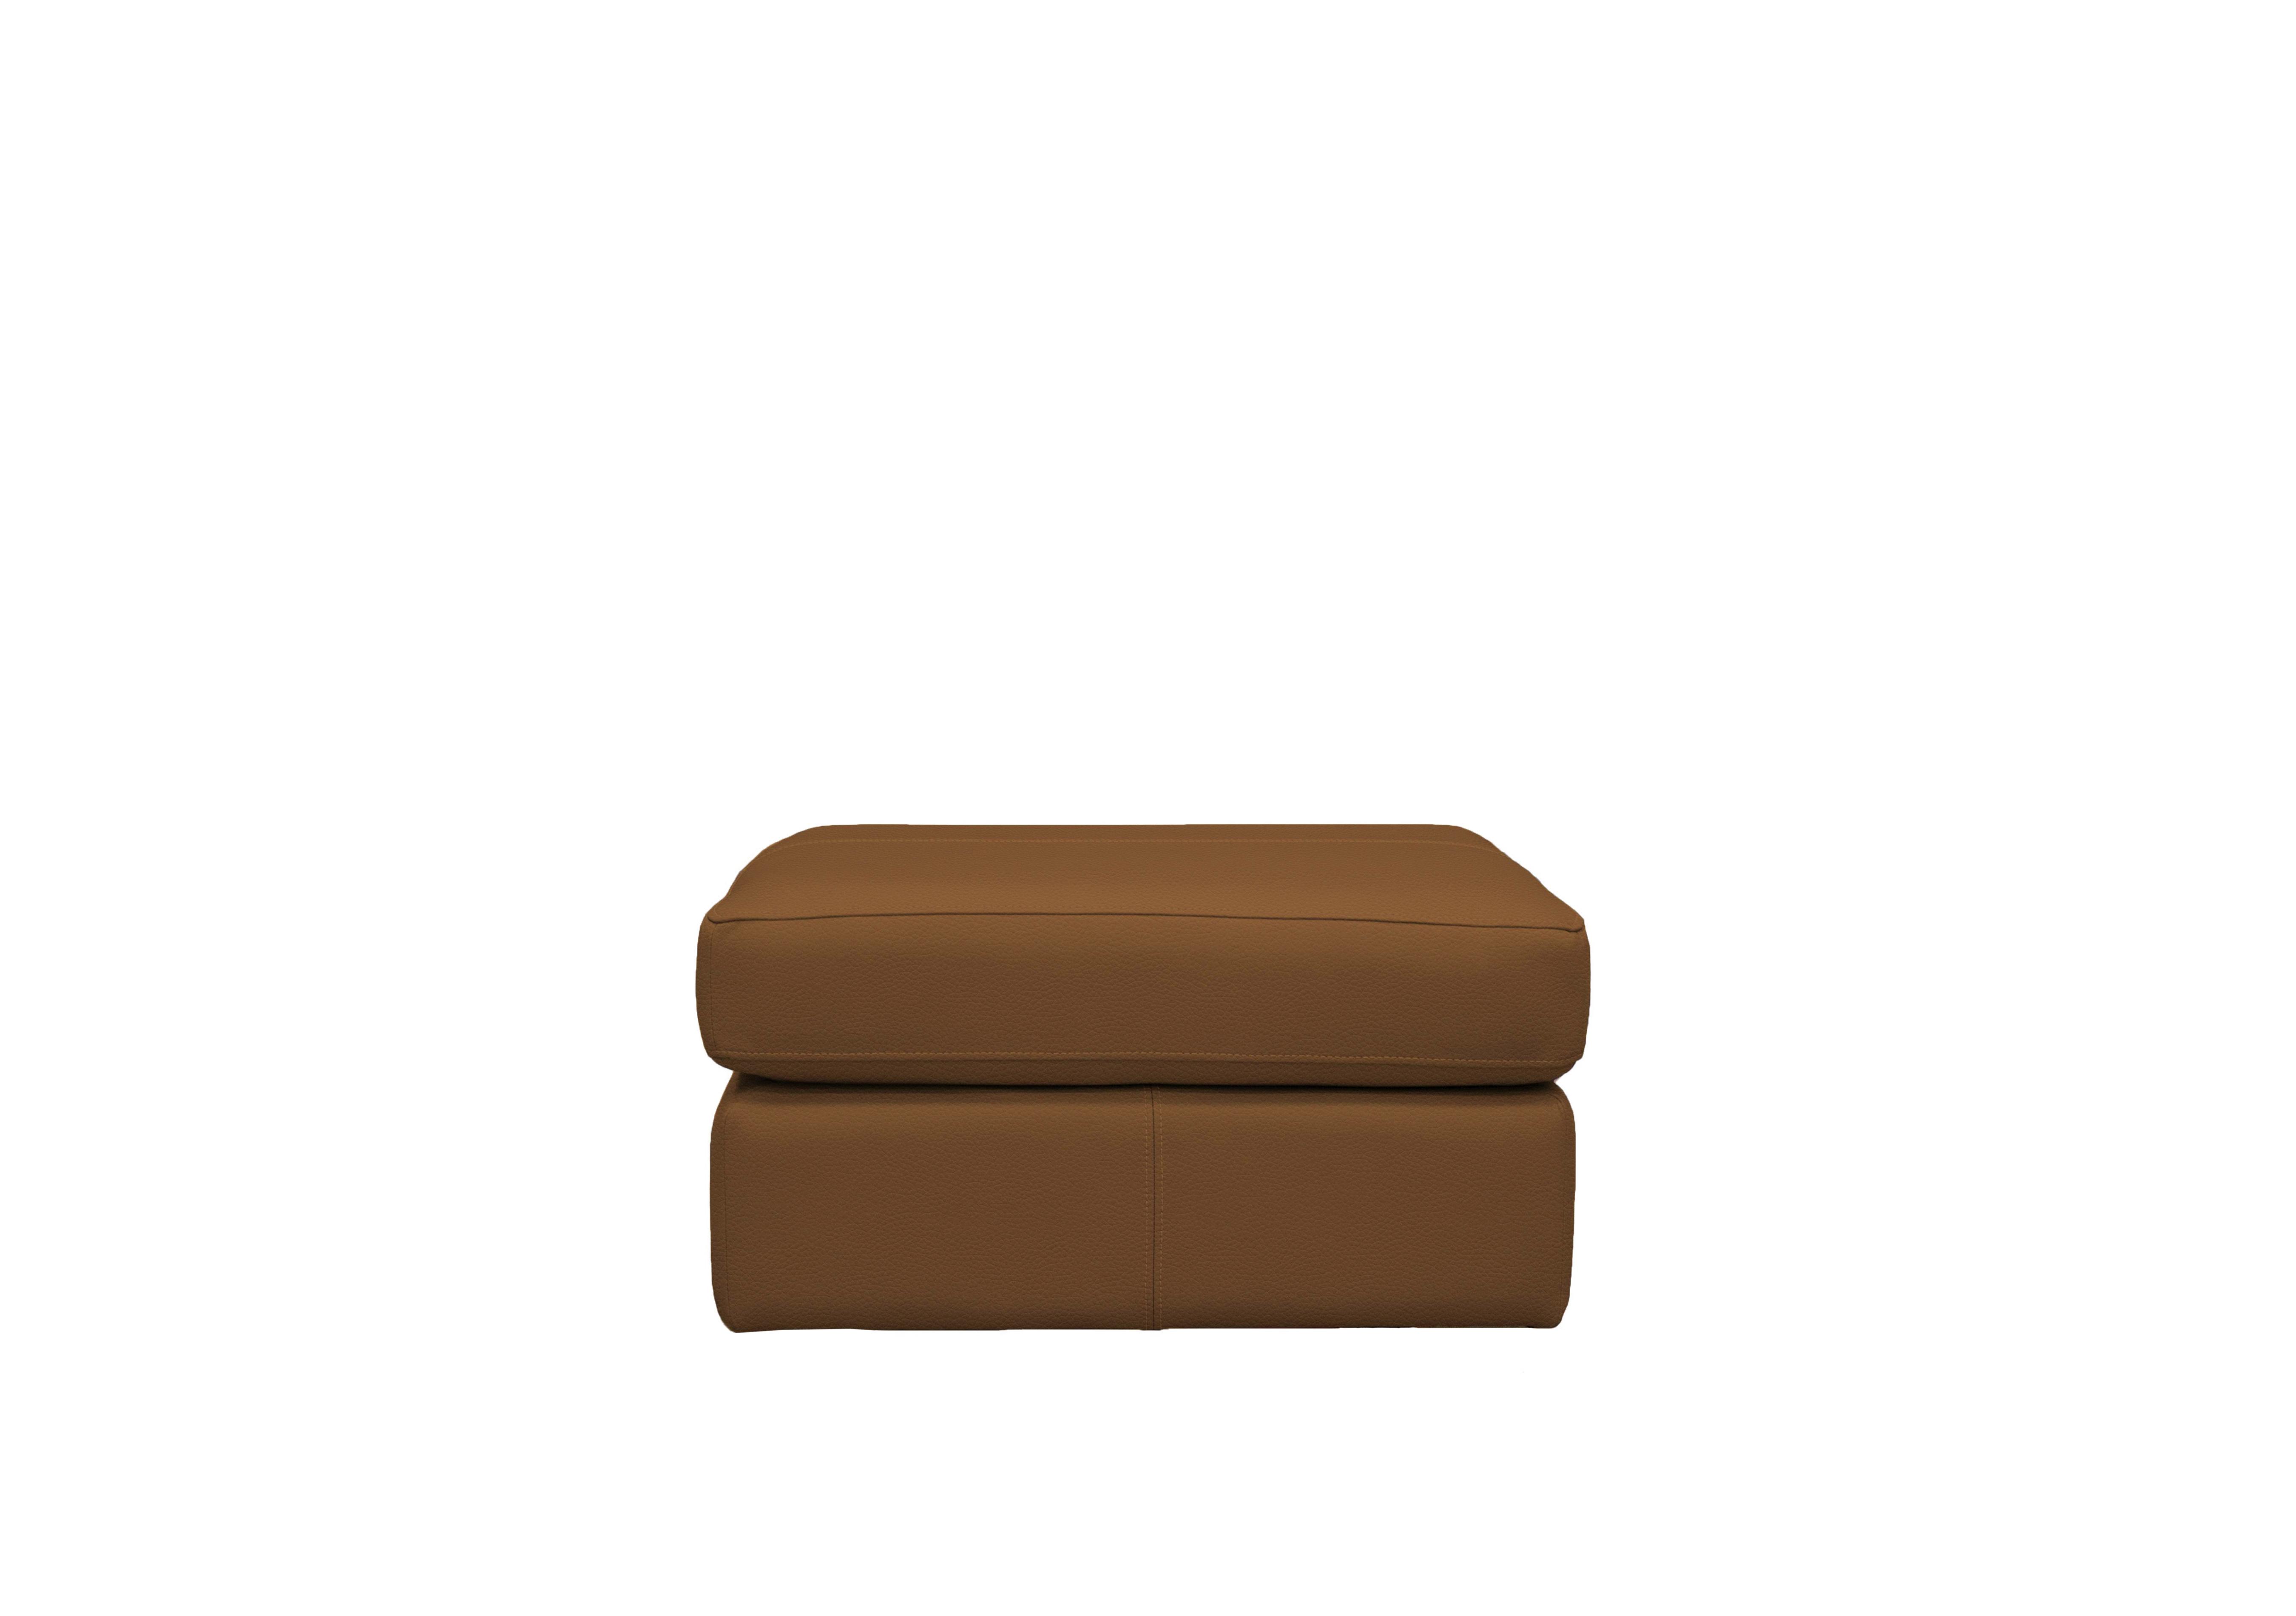 Seattle Leather Footstool in L847 Cambridge Tan on Furniture Village